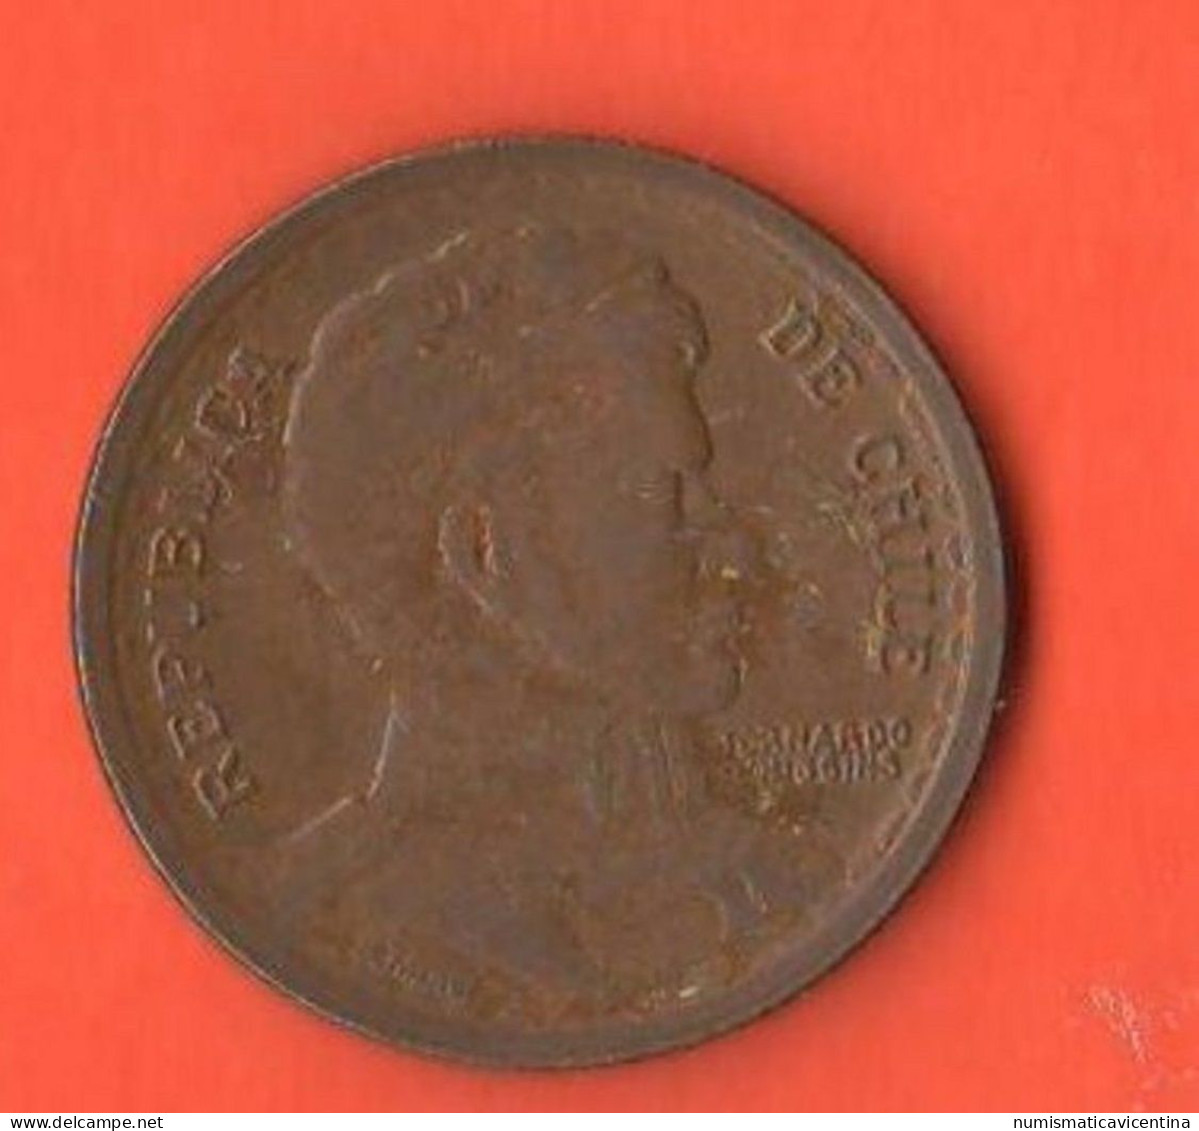 Cile Chile 1 Peso 1949 General Bernardo O'Higgens - Cile